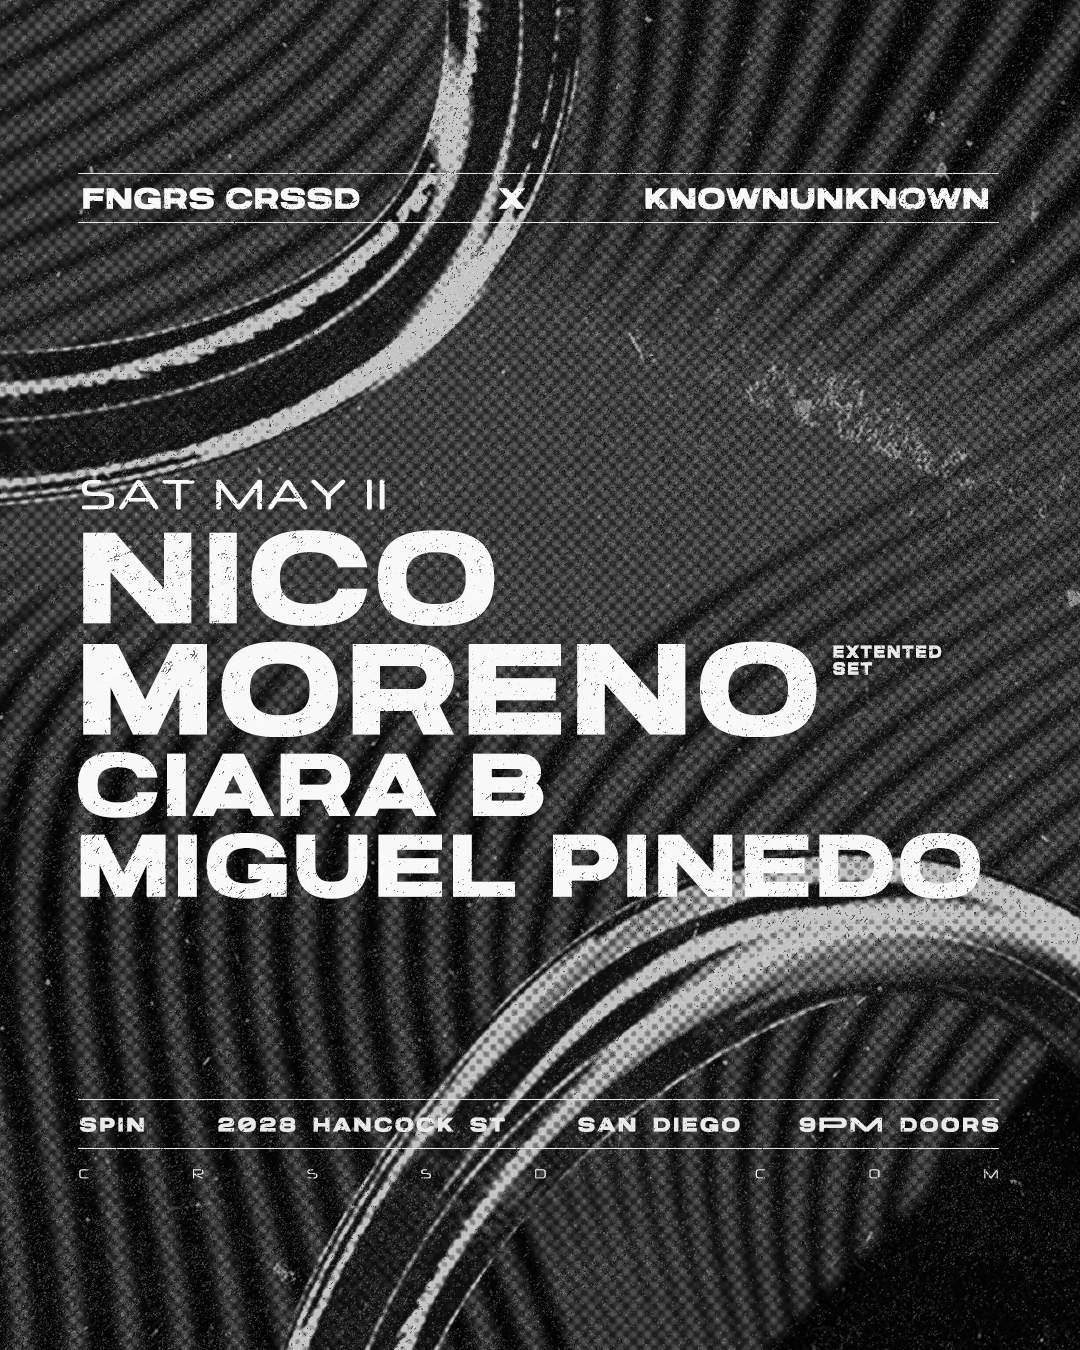 FNGRS CRSSD x knownunknown present Nico Moreno - フライヤー表